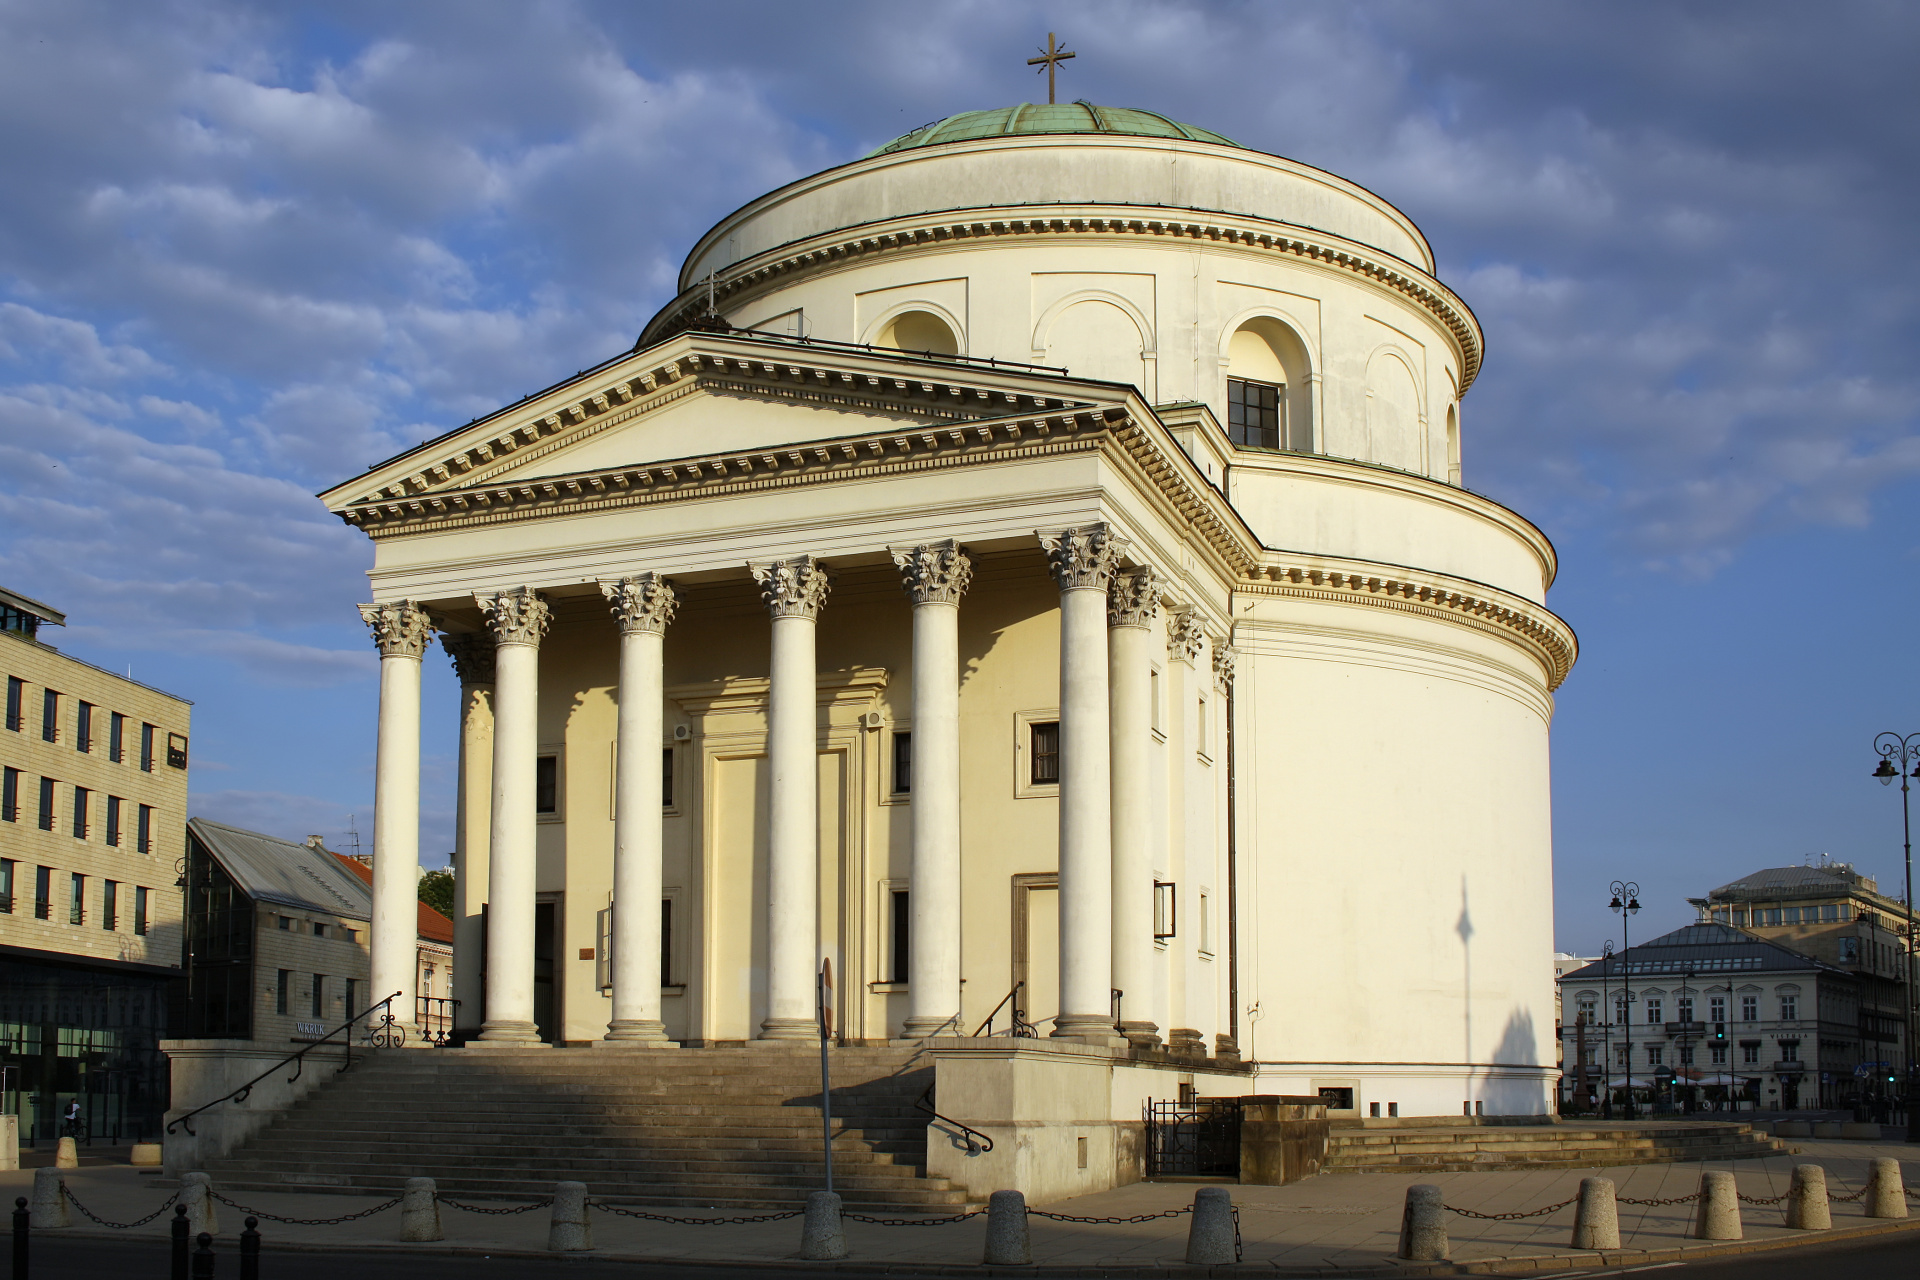 St. Alexander Church (Warsaw)